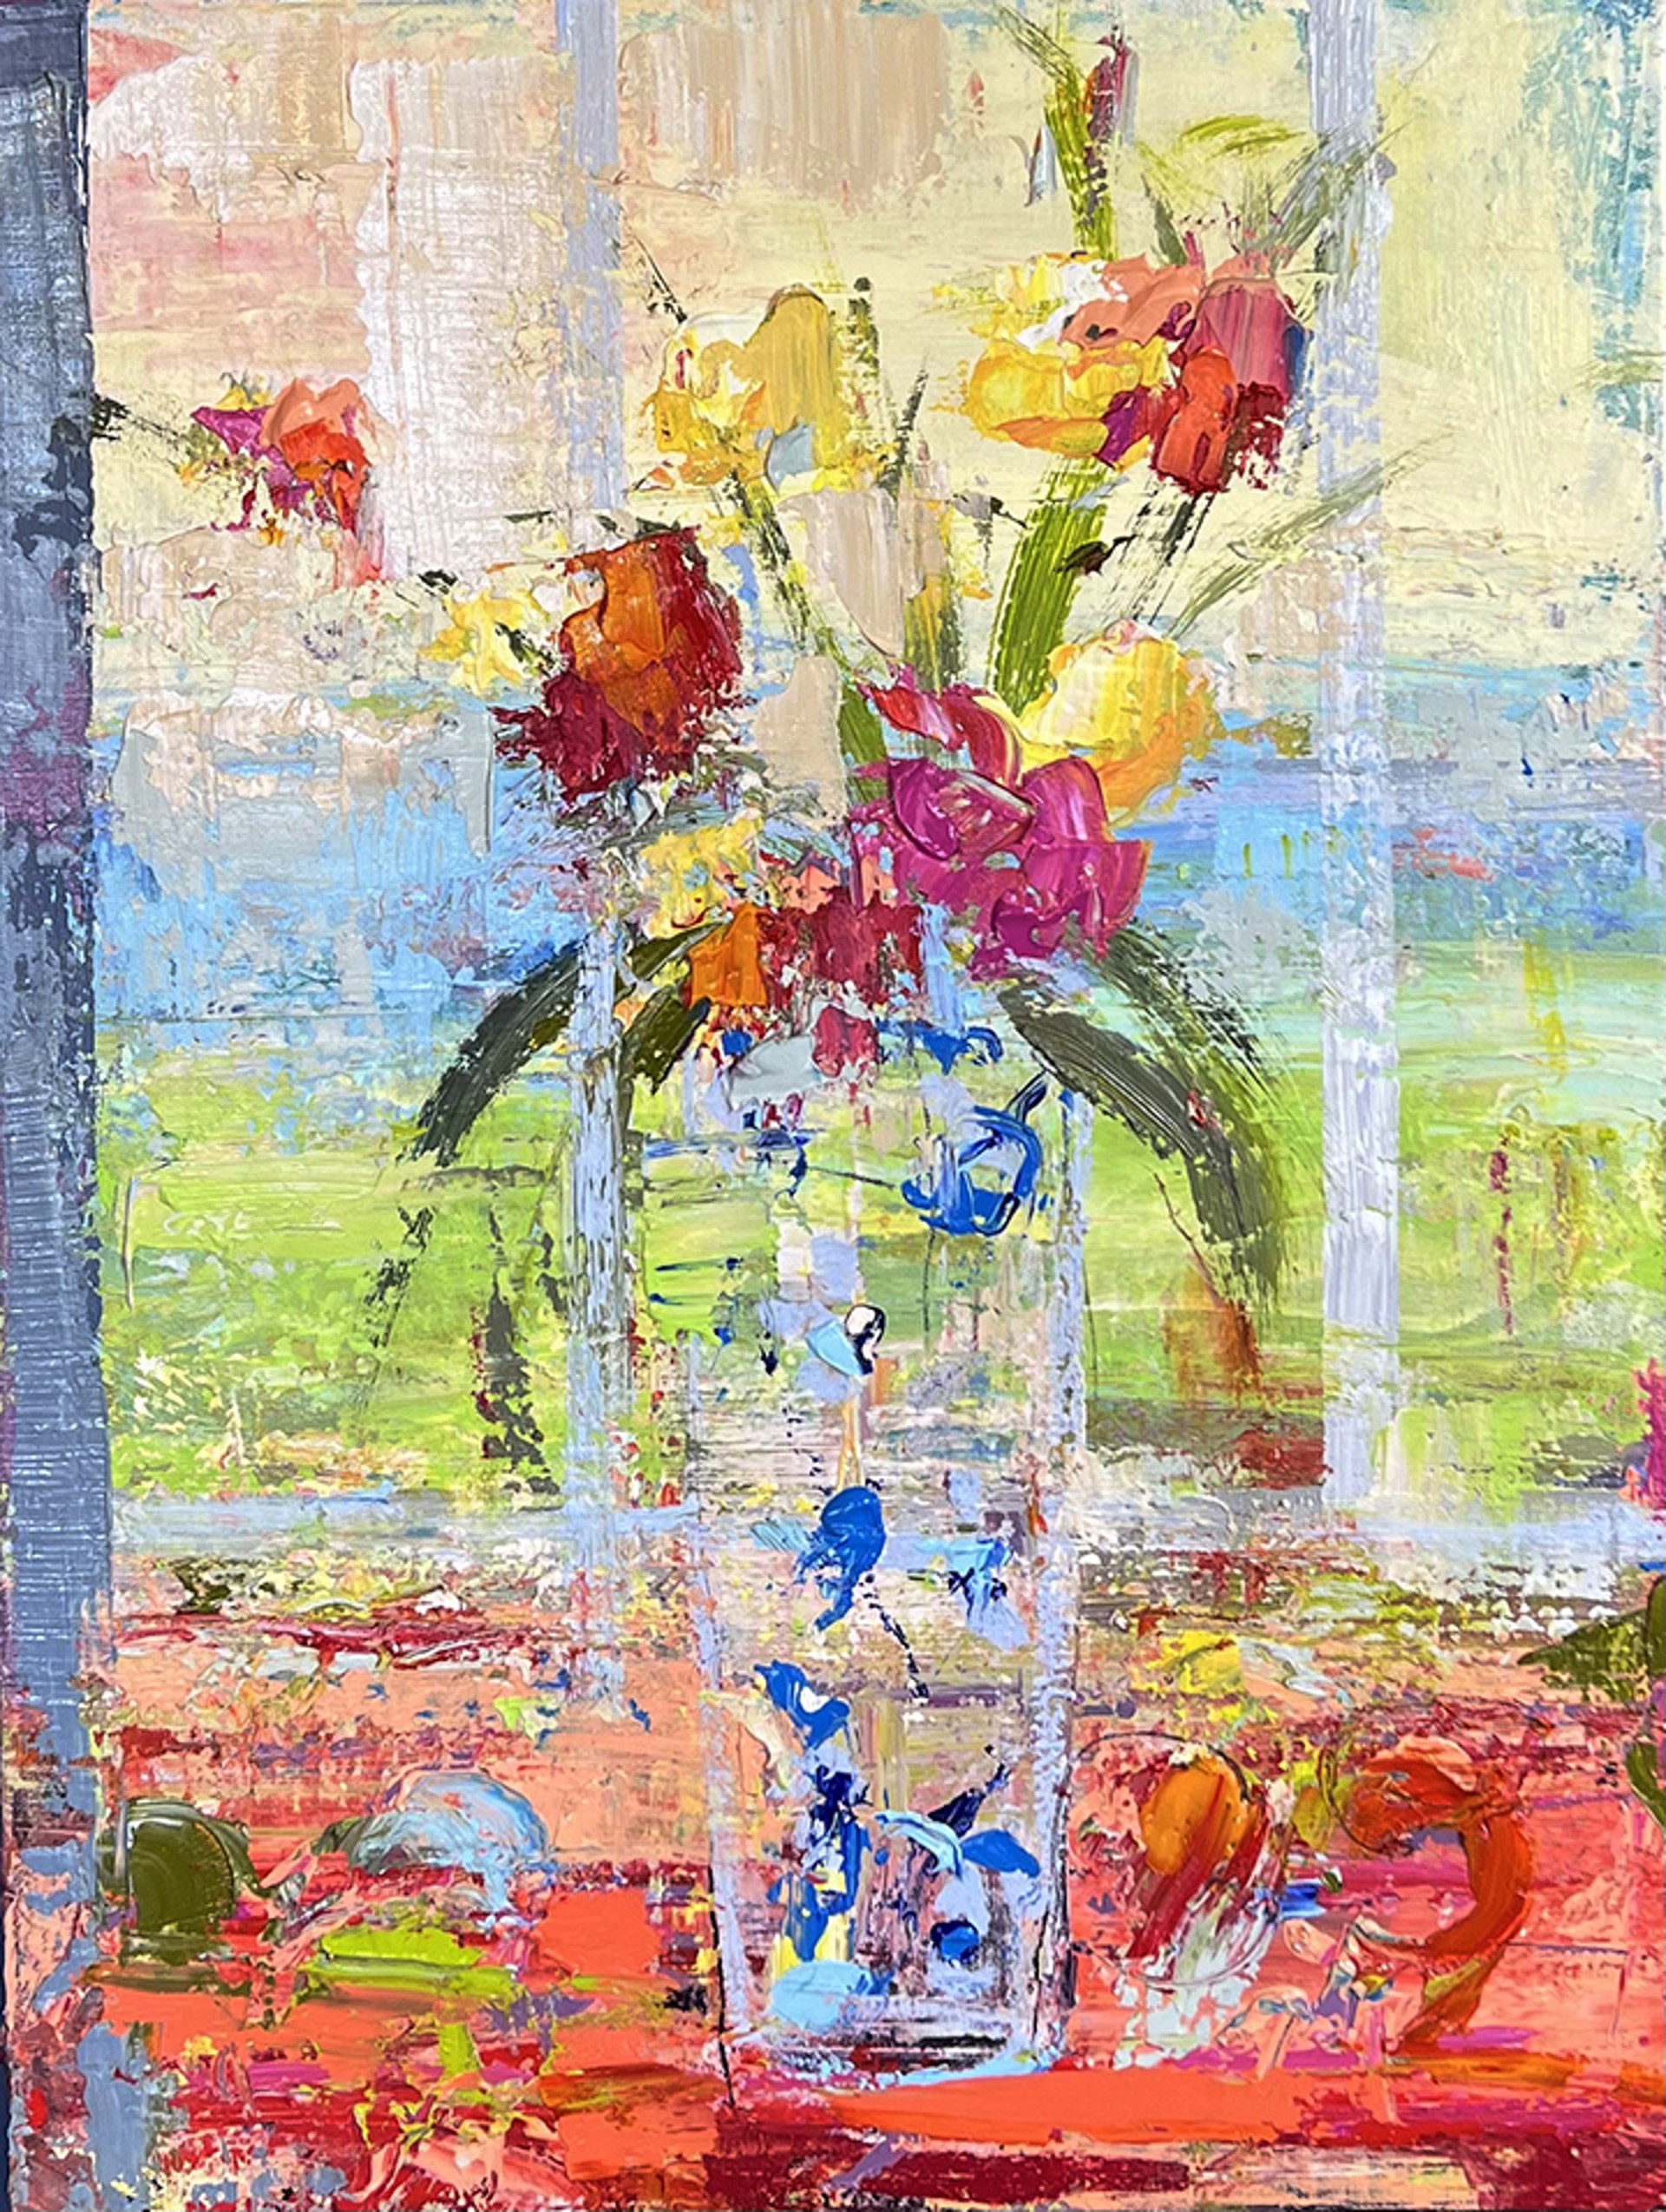 Morning Bouquet by Noah Desmond